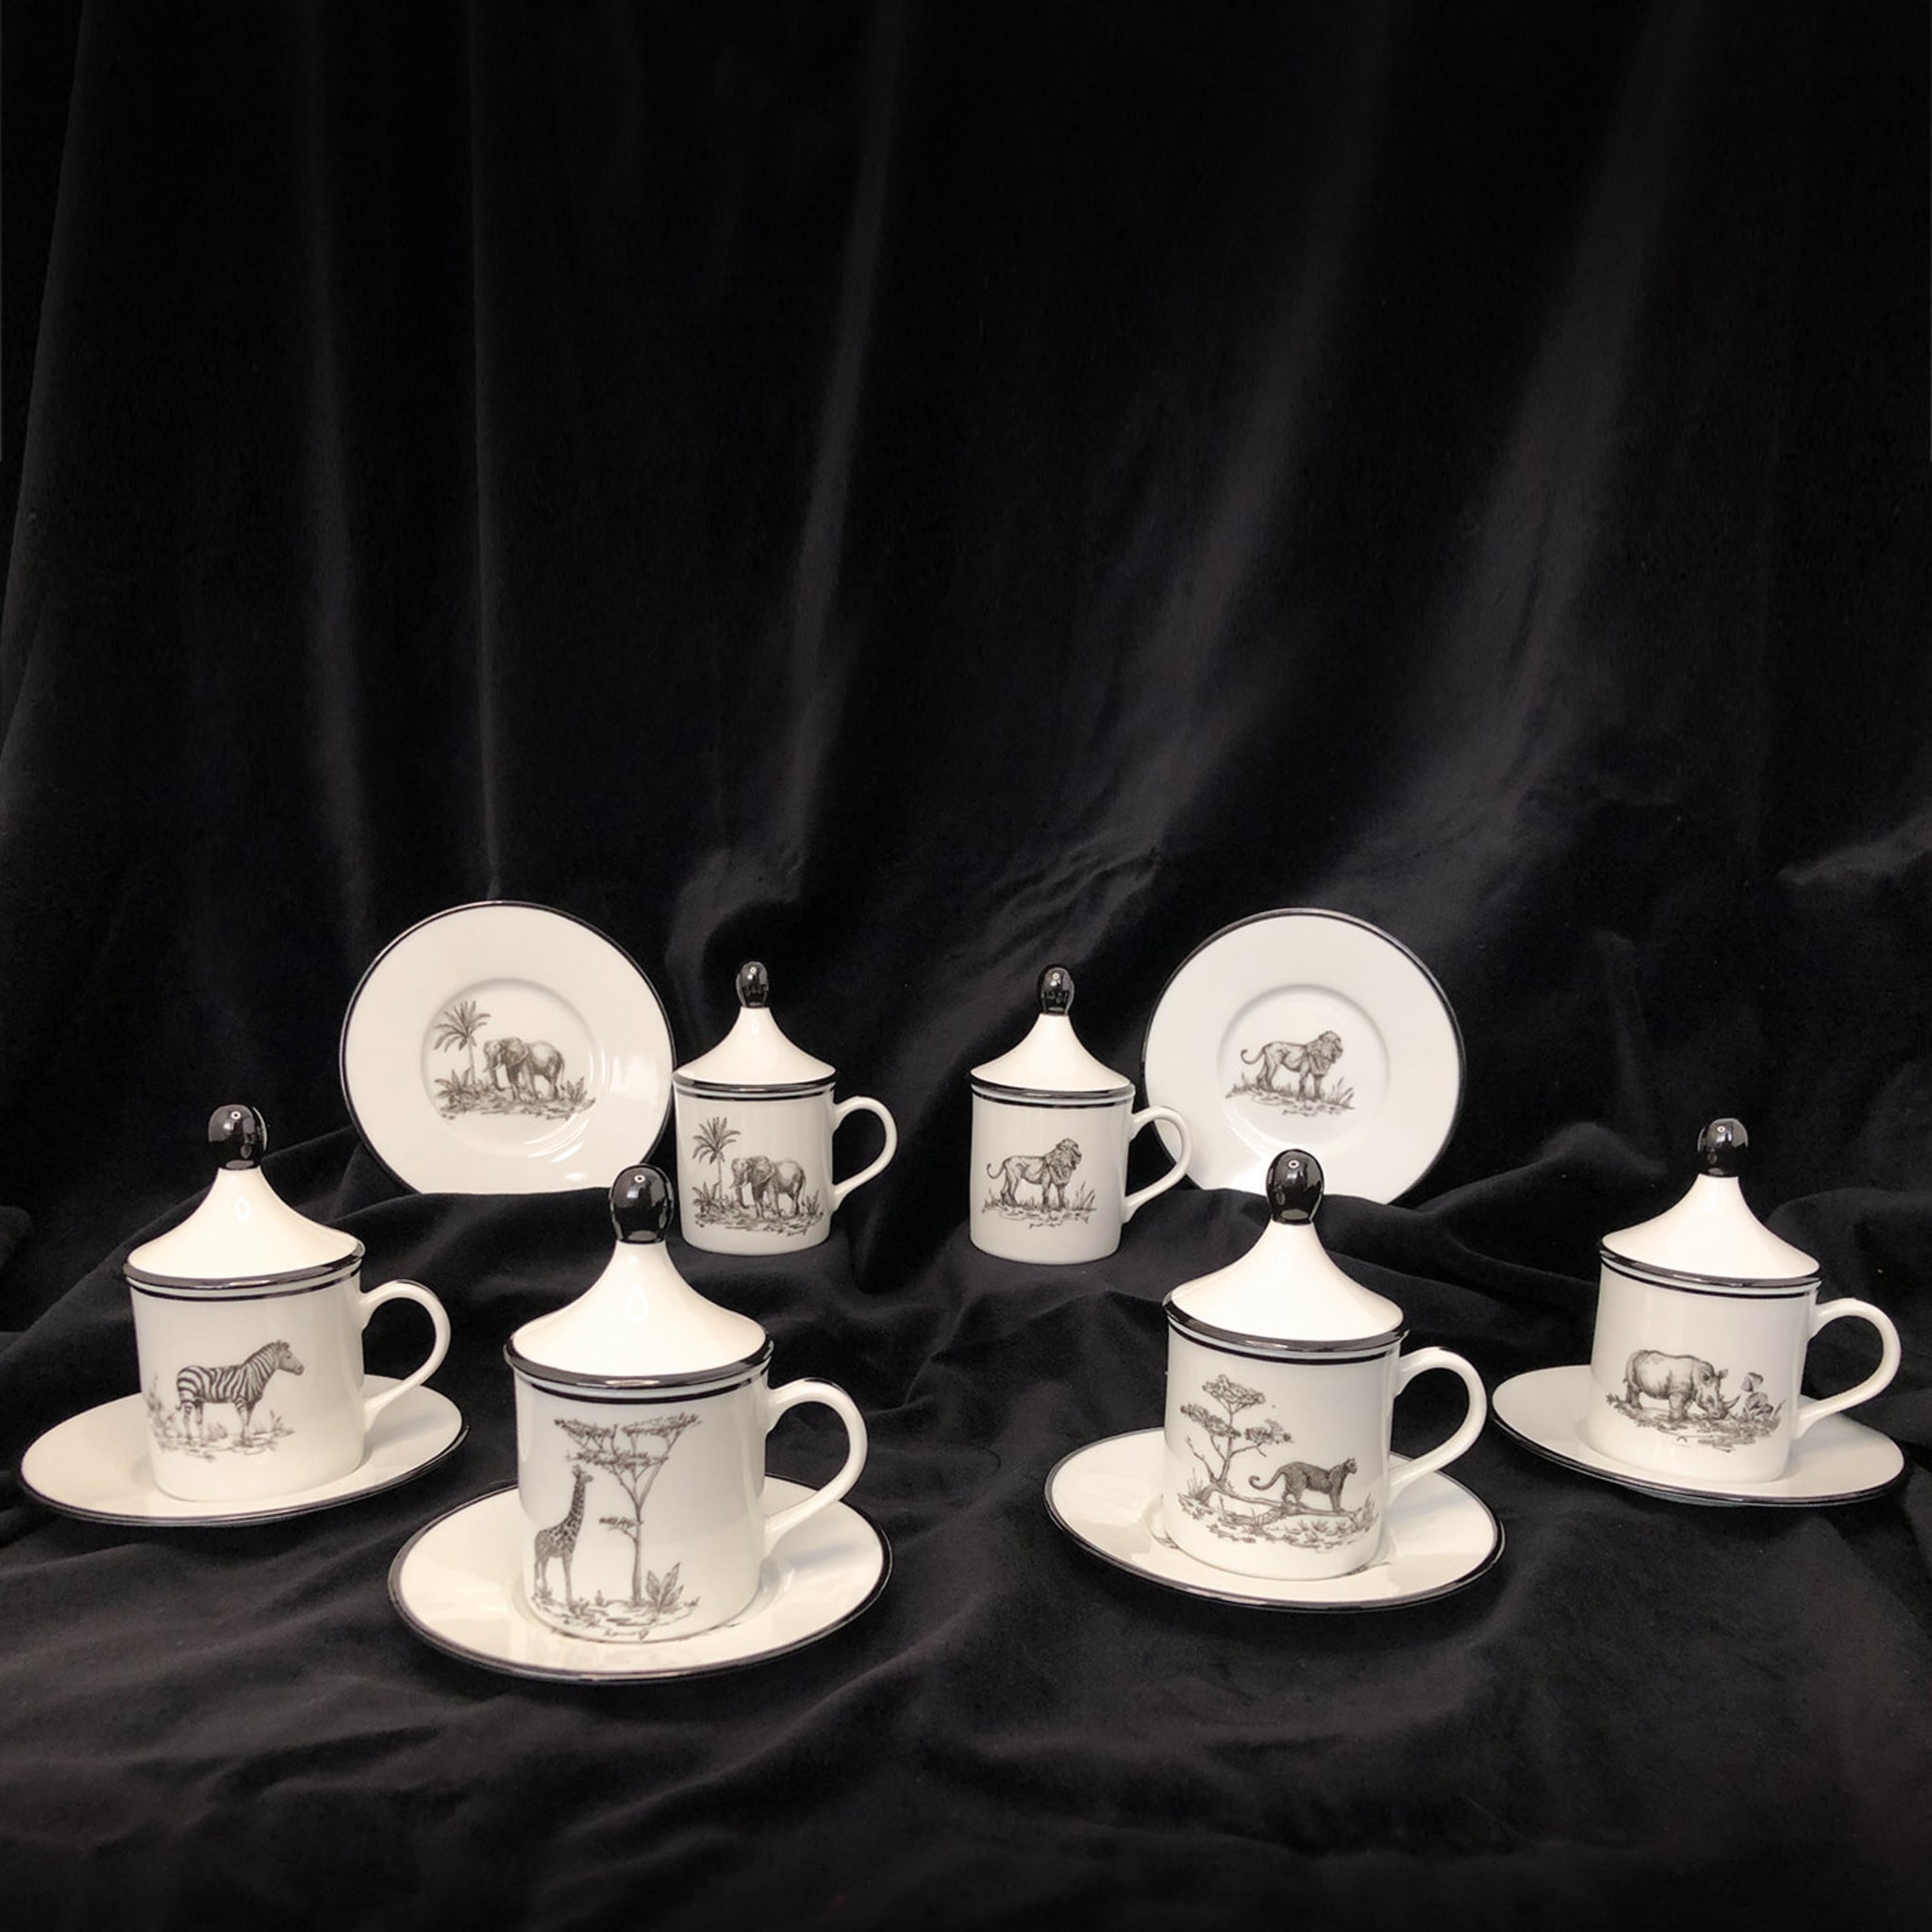 Set of 6 Savana Espresso Cups - Alternative view 1